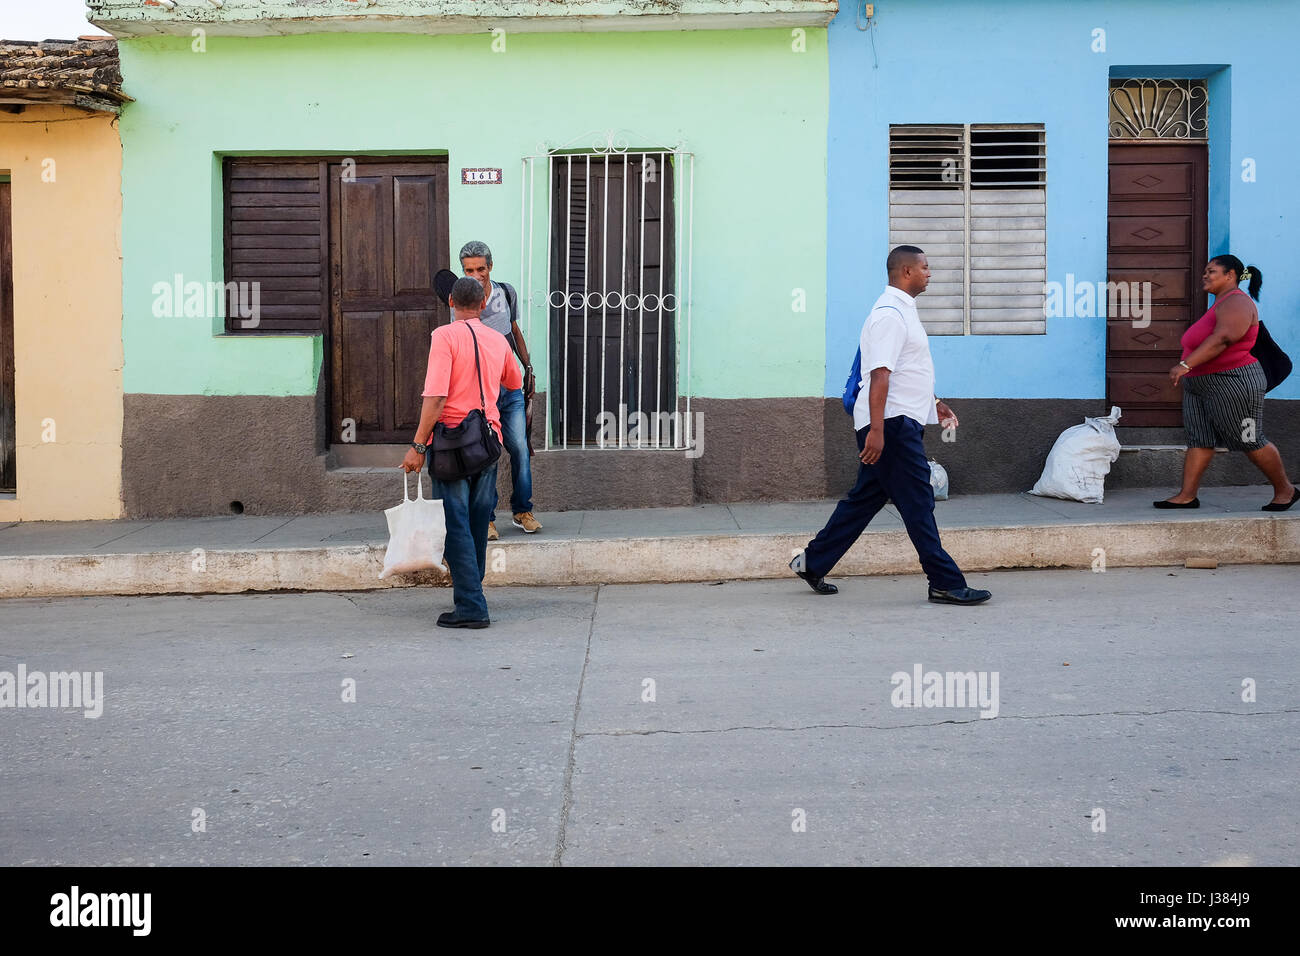 Local street life in Trinidad, Sancti Spiritus, Cuba. Persons passing by. Stock Photo